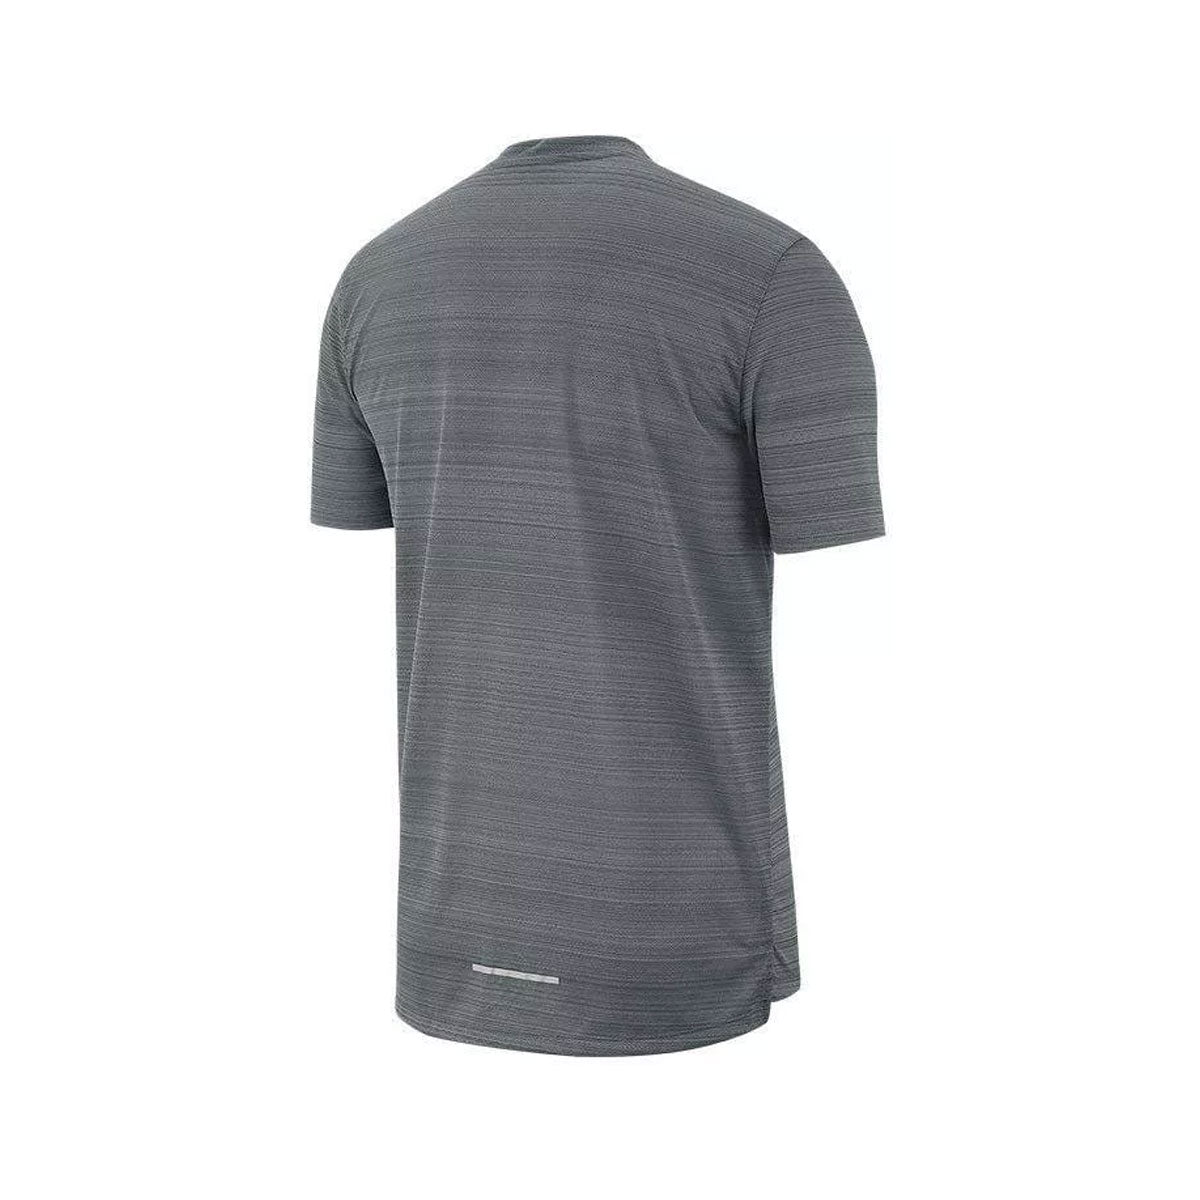 Nike Men's Dry Miler Short Sleeve Top - KickzStore